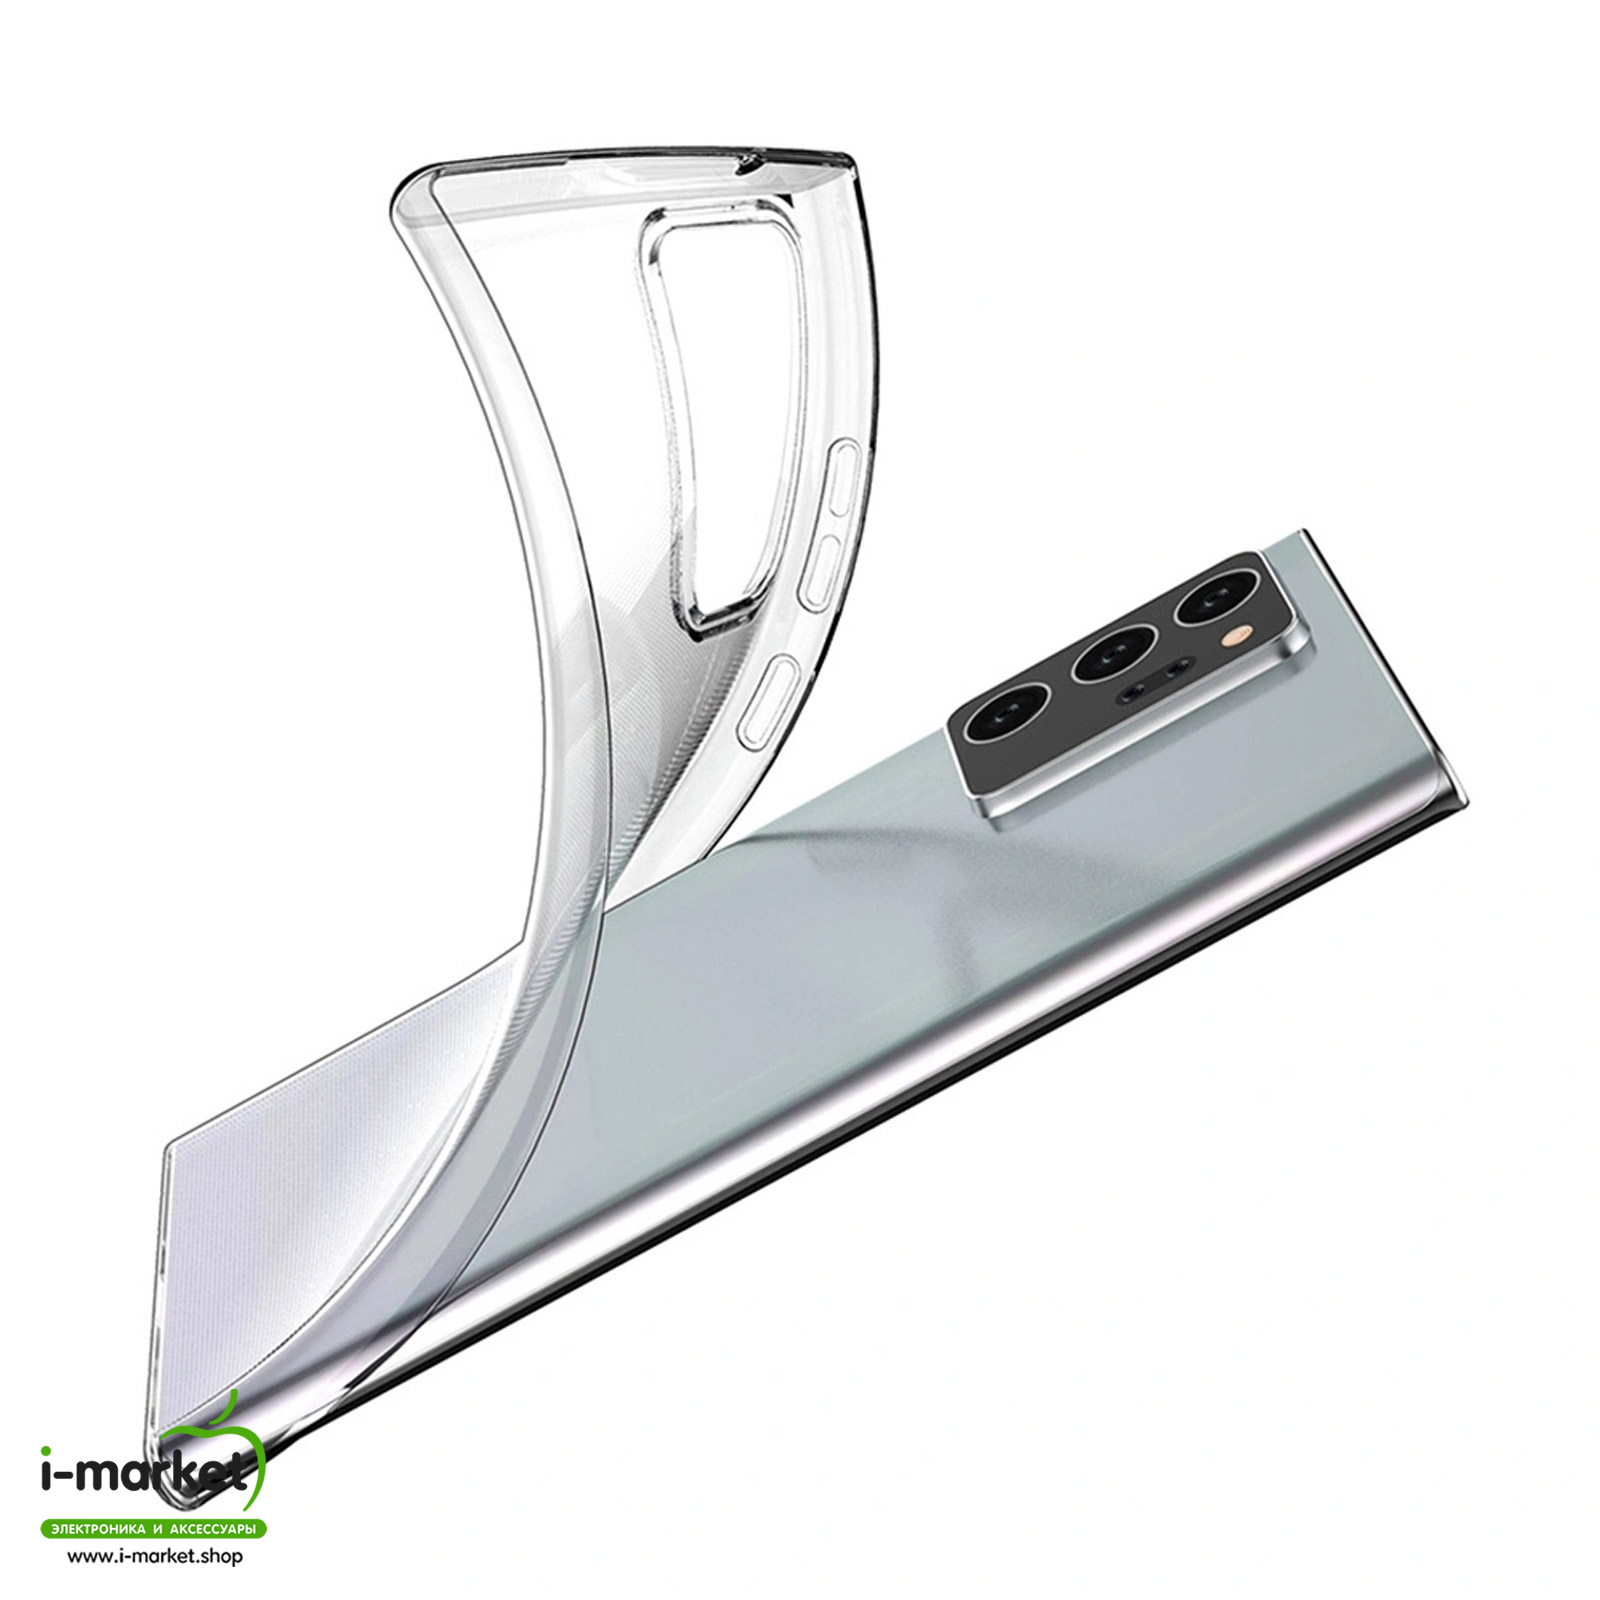 Чехол накладка TPU CASE для SAMSUNG Galaxy Note 20 Ultra (SM-N9860), силикон, цвет прозрачный